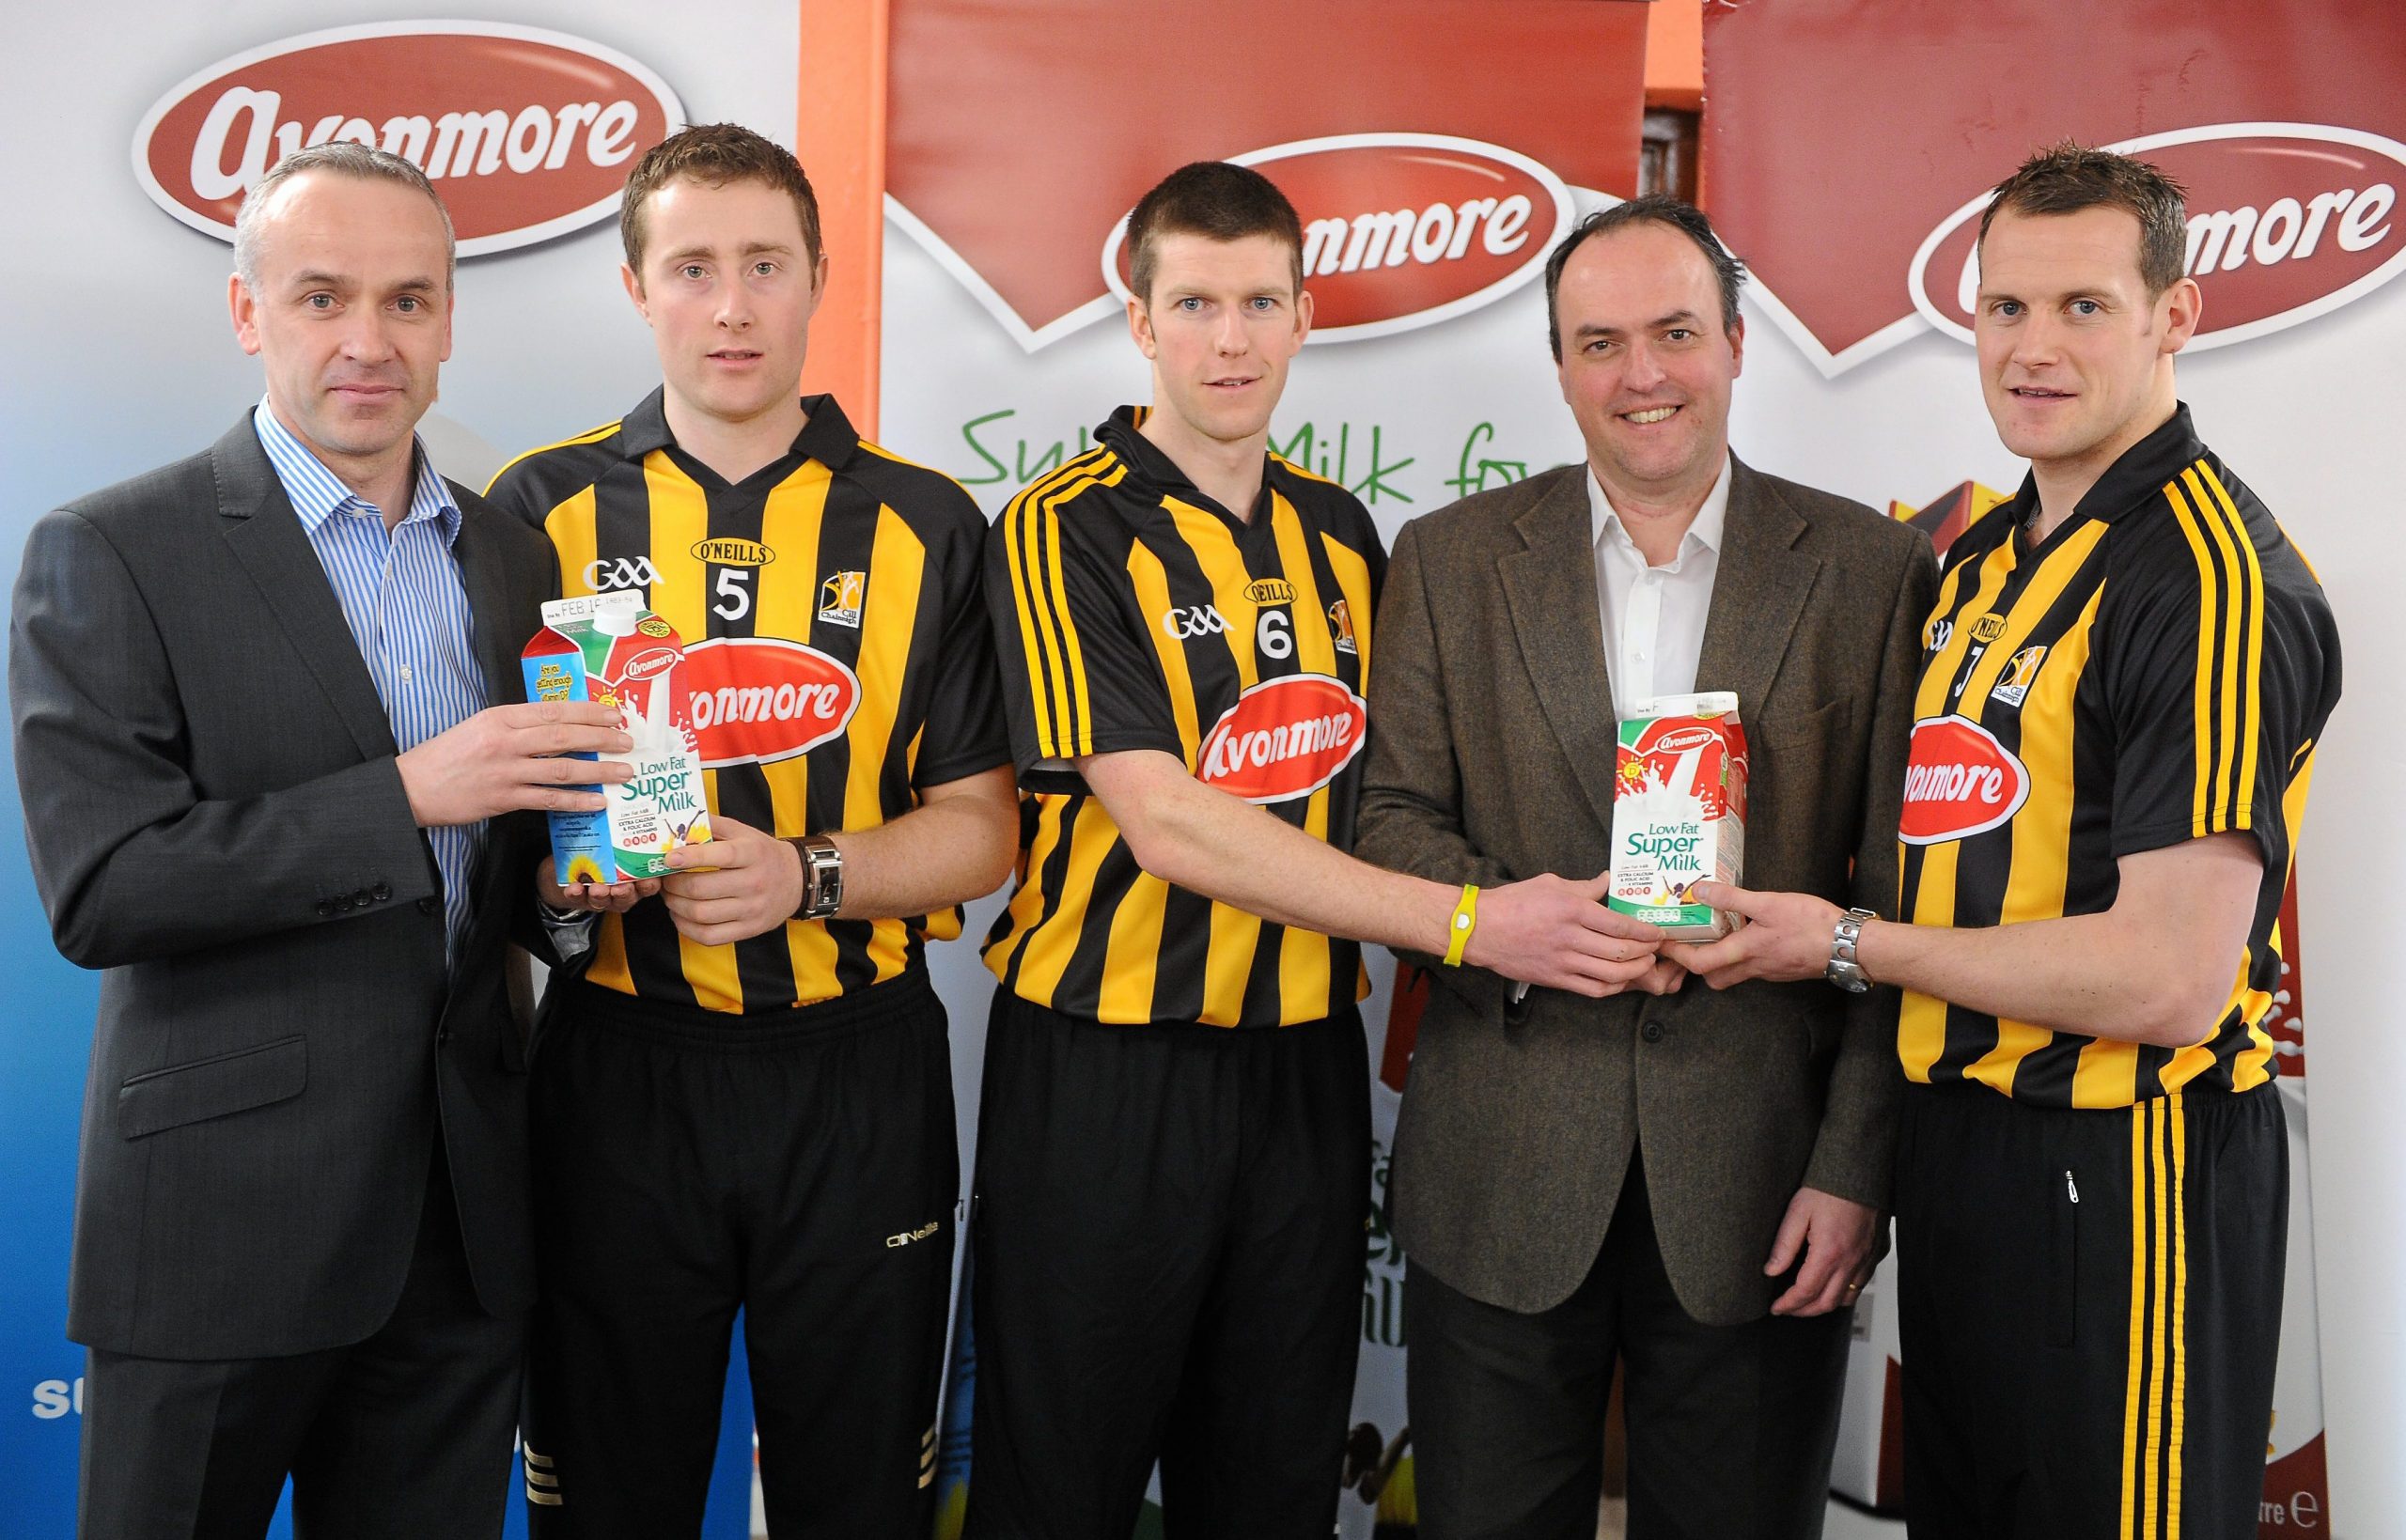 Glanbia launch its “Avonmore Milk” sponsorship of Kilkenny Hurlers for 2011